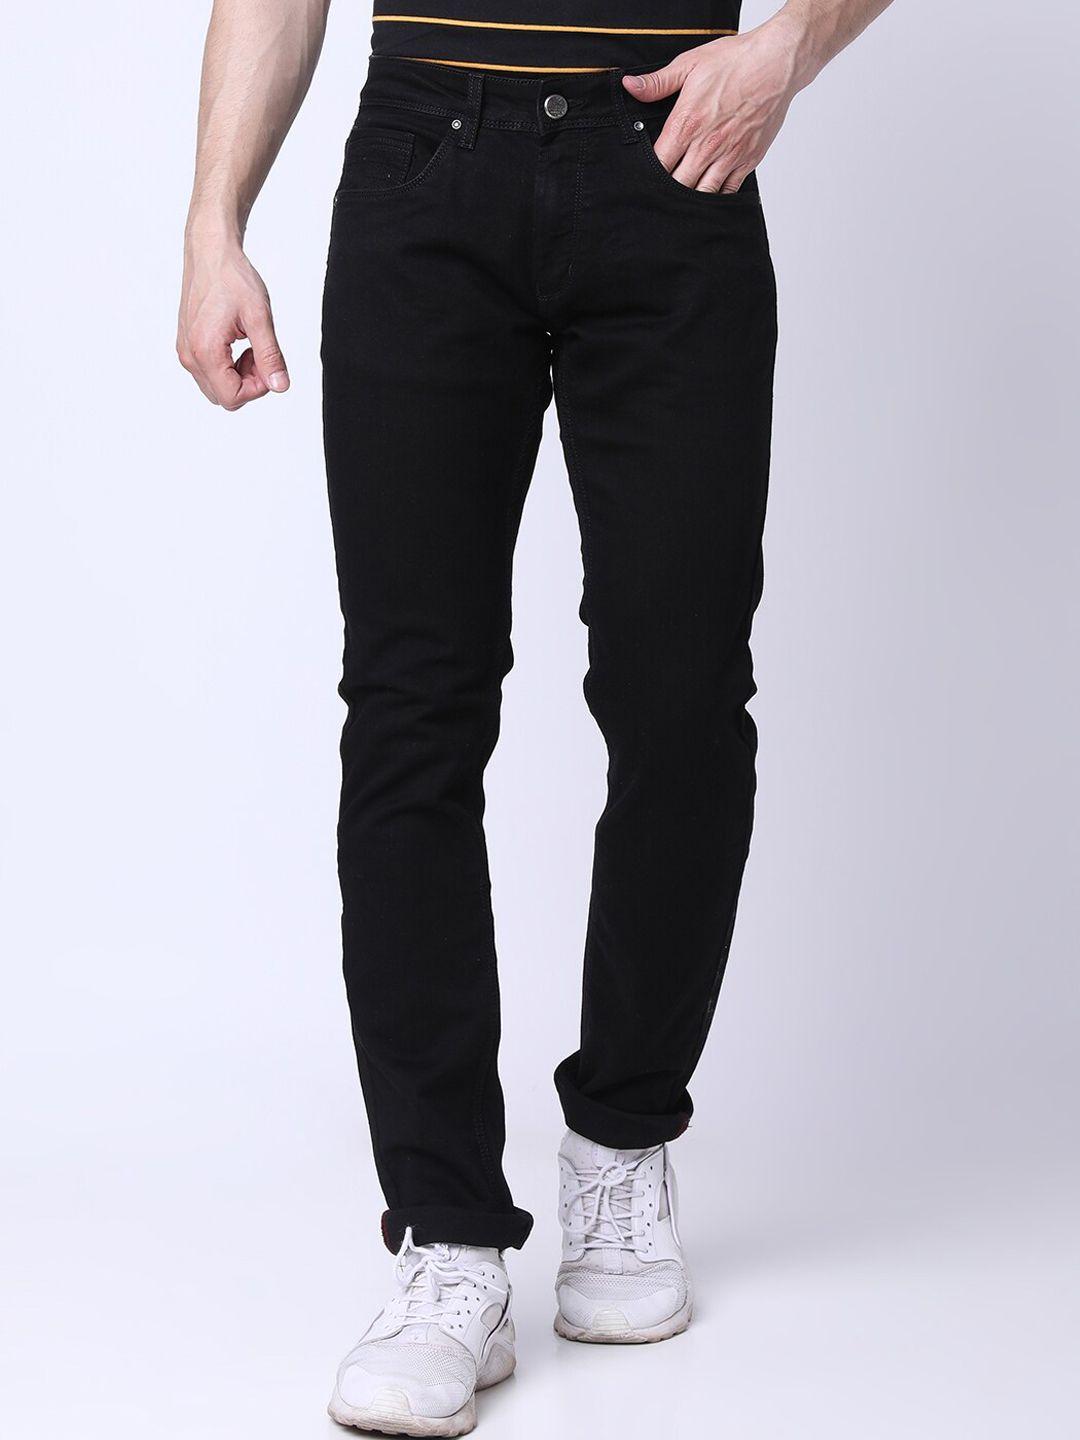 oxemberg-men-lean-slim-fit-low-distress-clean-look-jeans